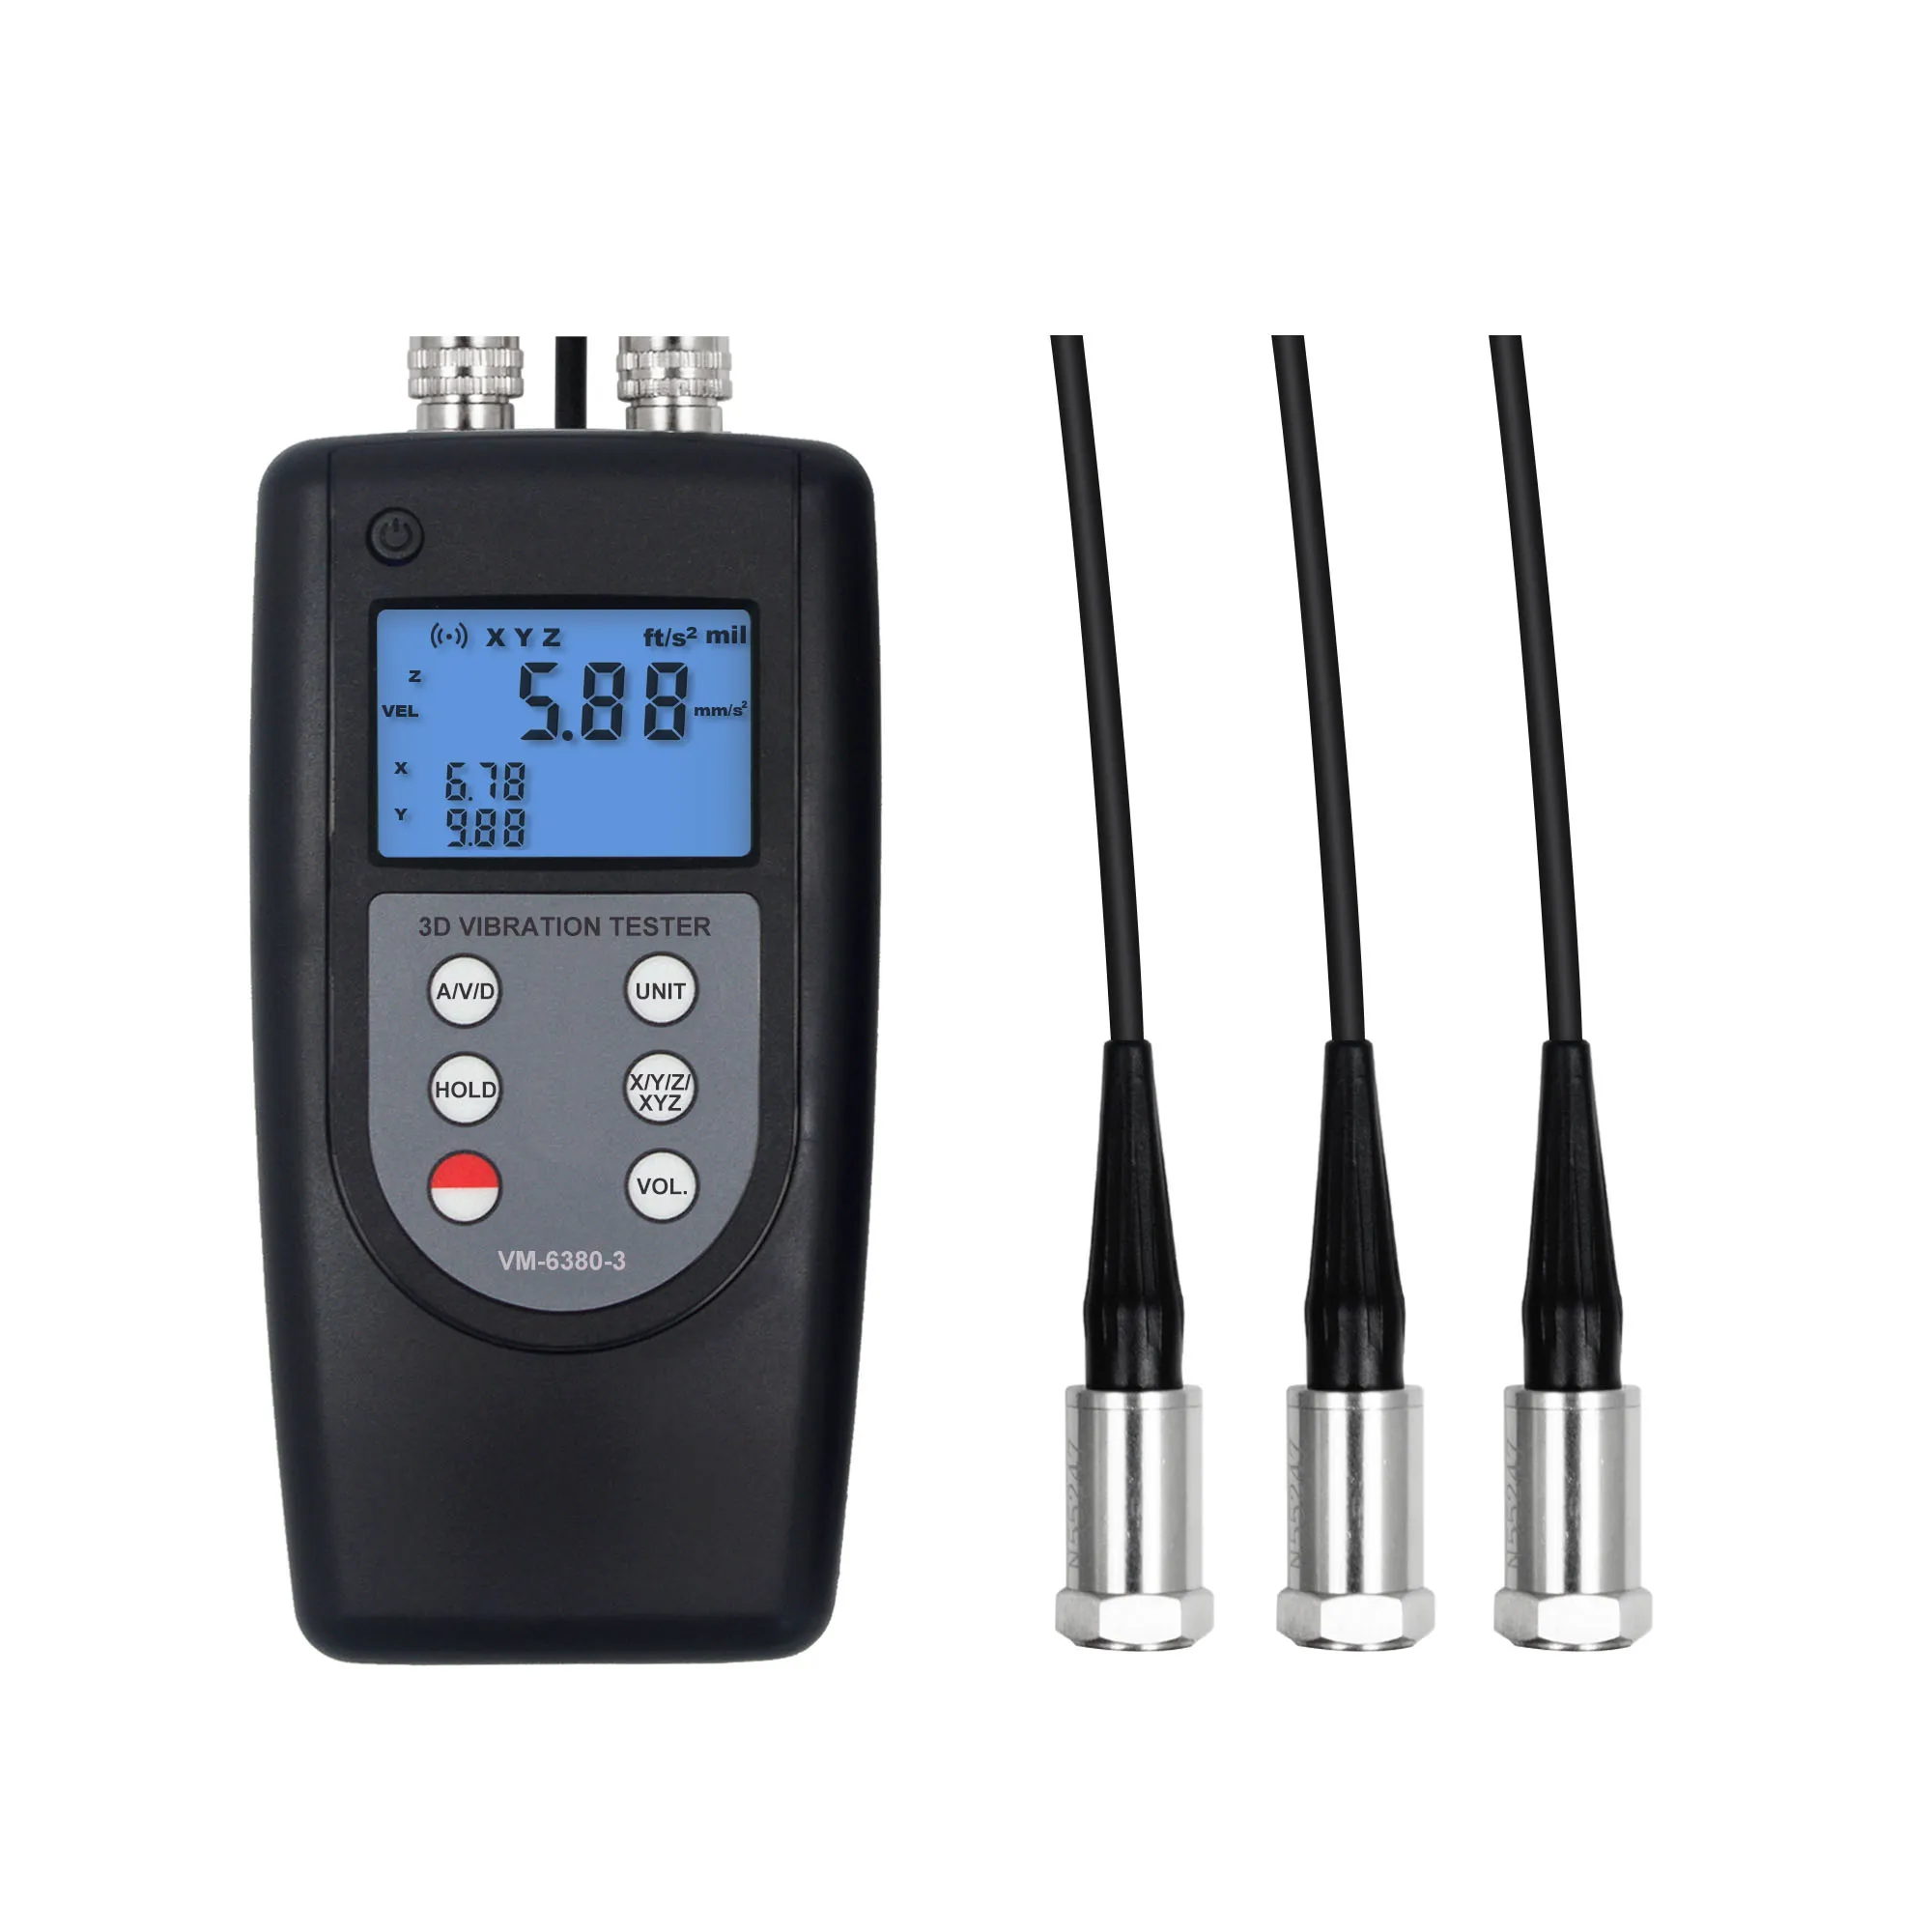 3D Vibration Tester 3 Channels VM-6380-3 Digital Vibrometer 0.01-400mm/s True RMS